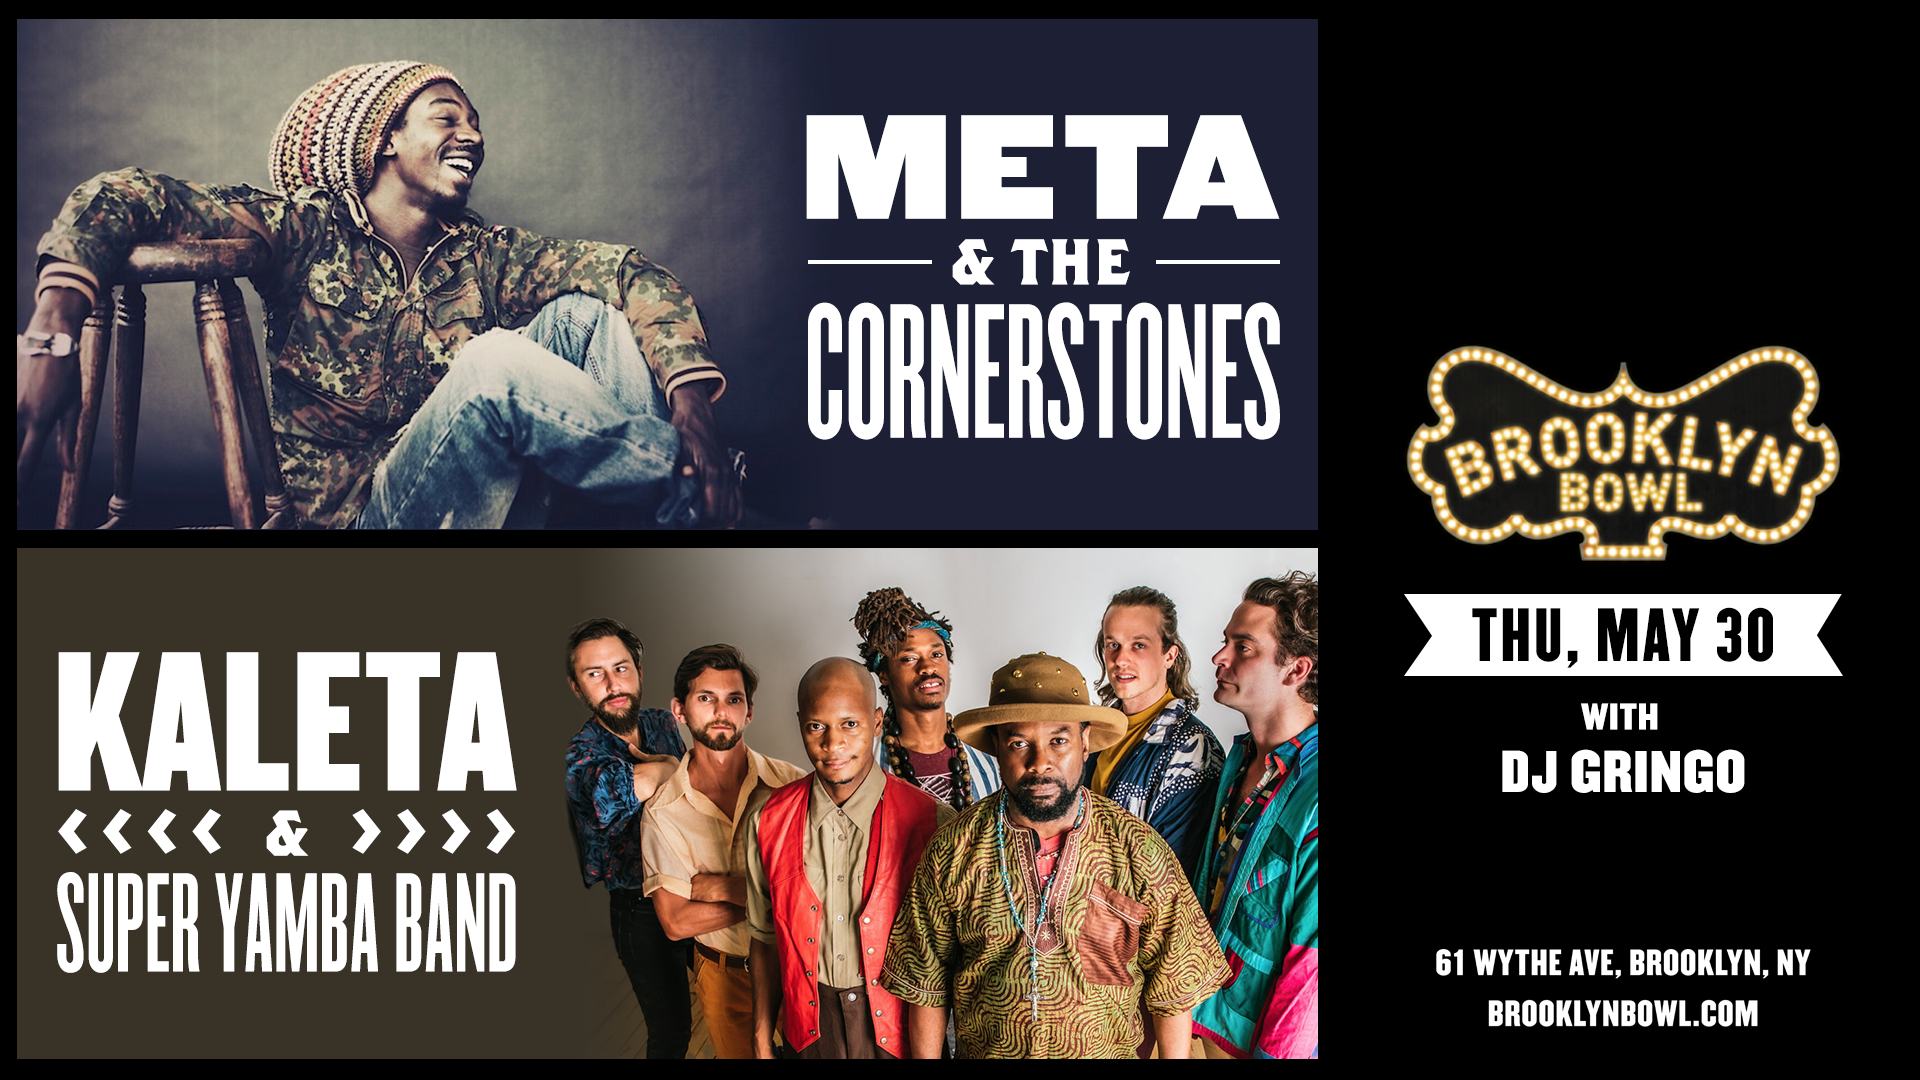 Meta & The Cornerstones + Kaleta & Super Yamba Band